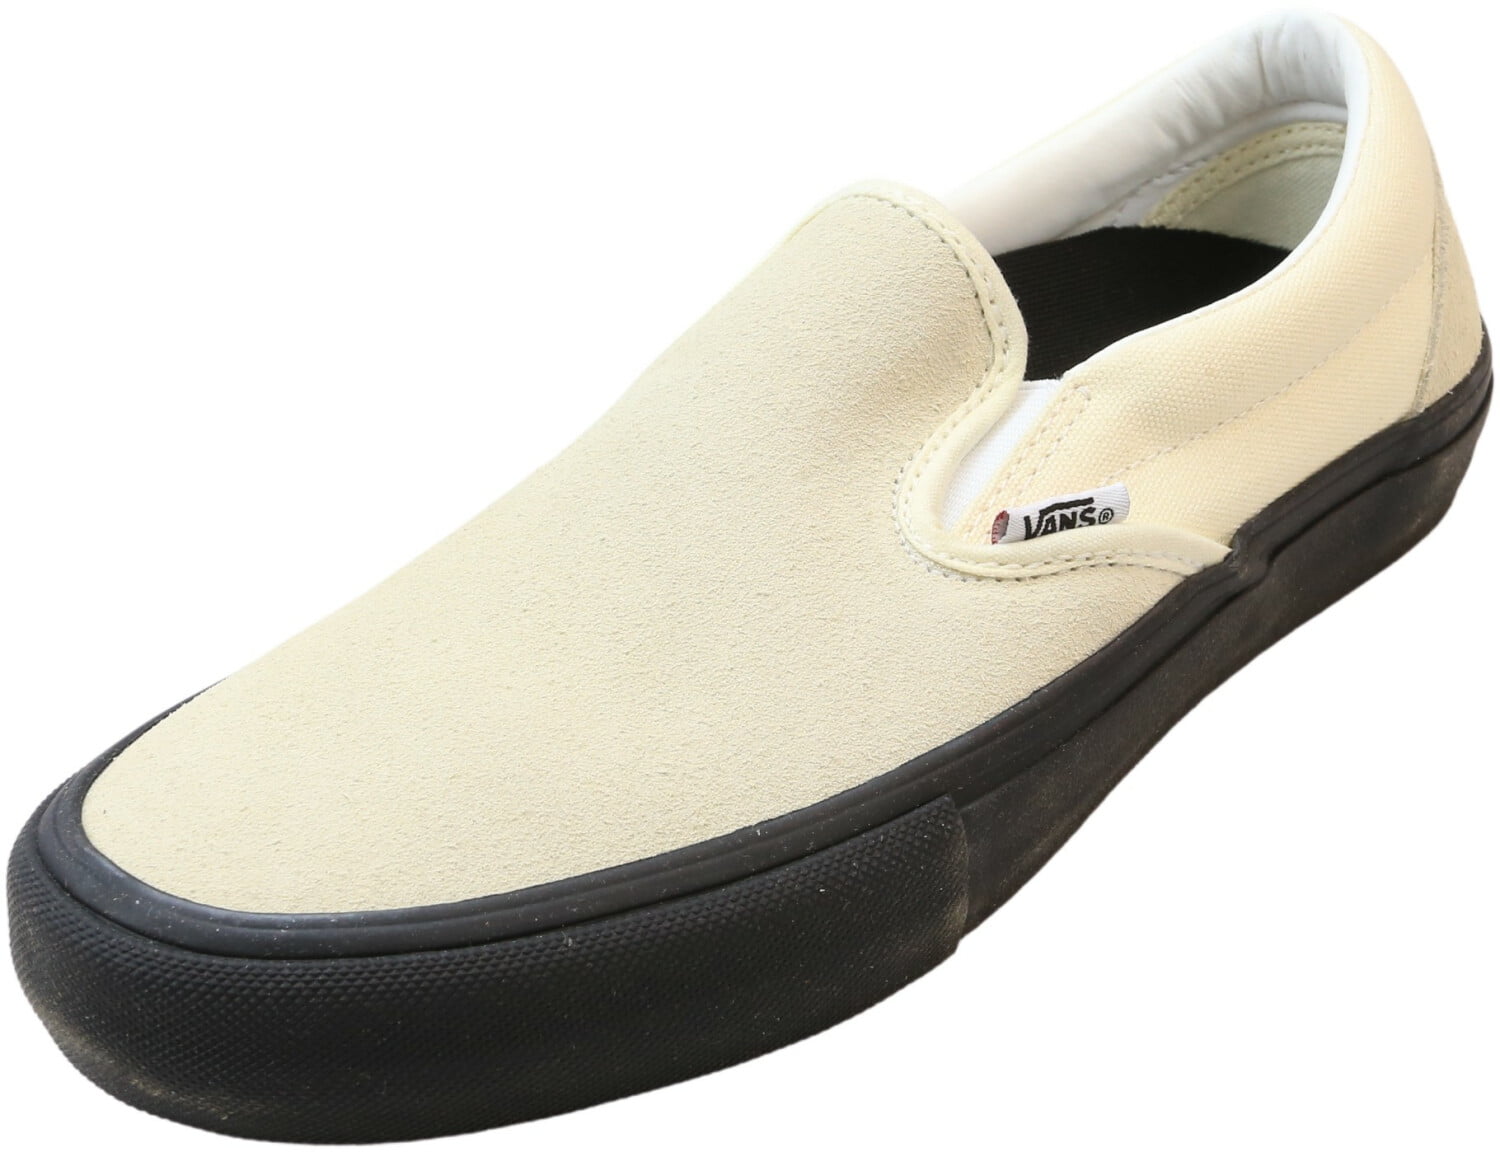 Vans Men's Slip-On Pro Classic / Black Sneaker - 6.5 M Walmart.com